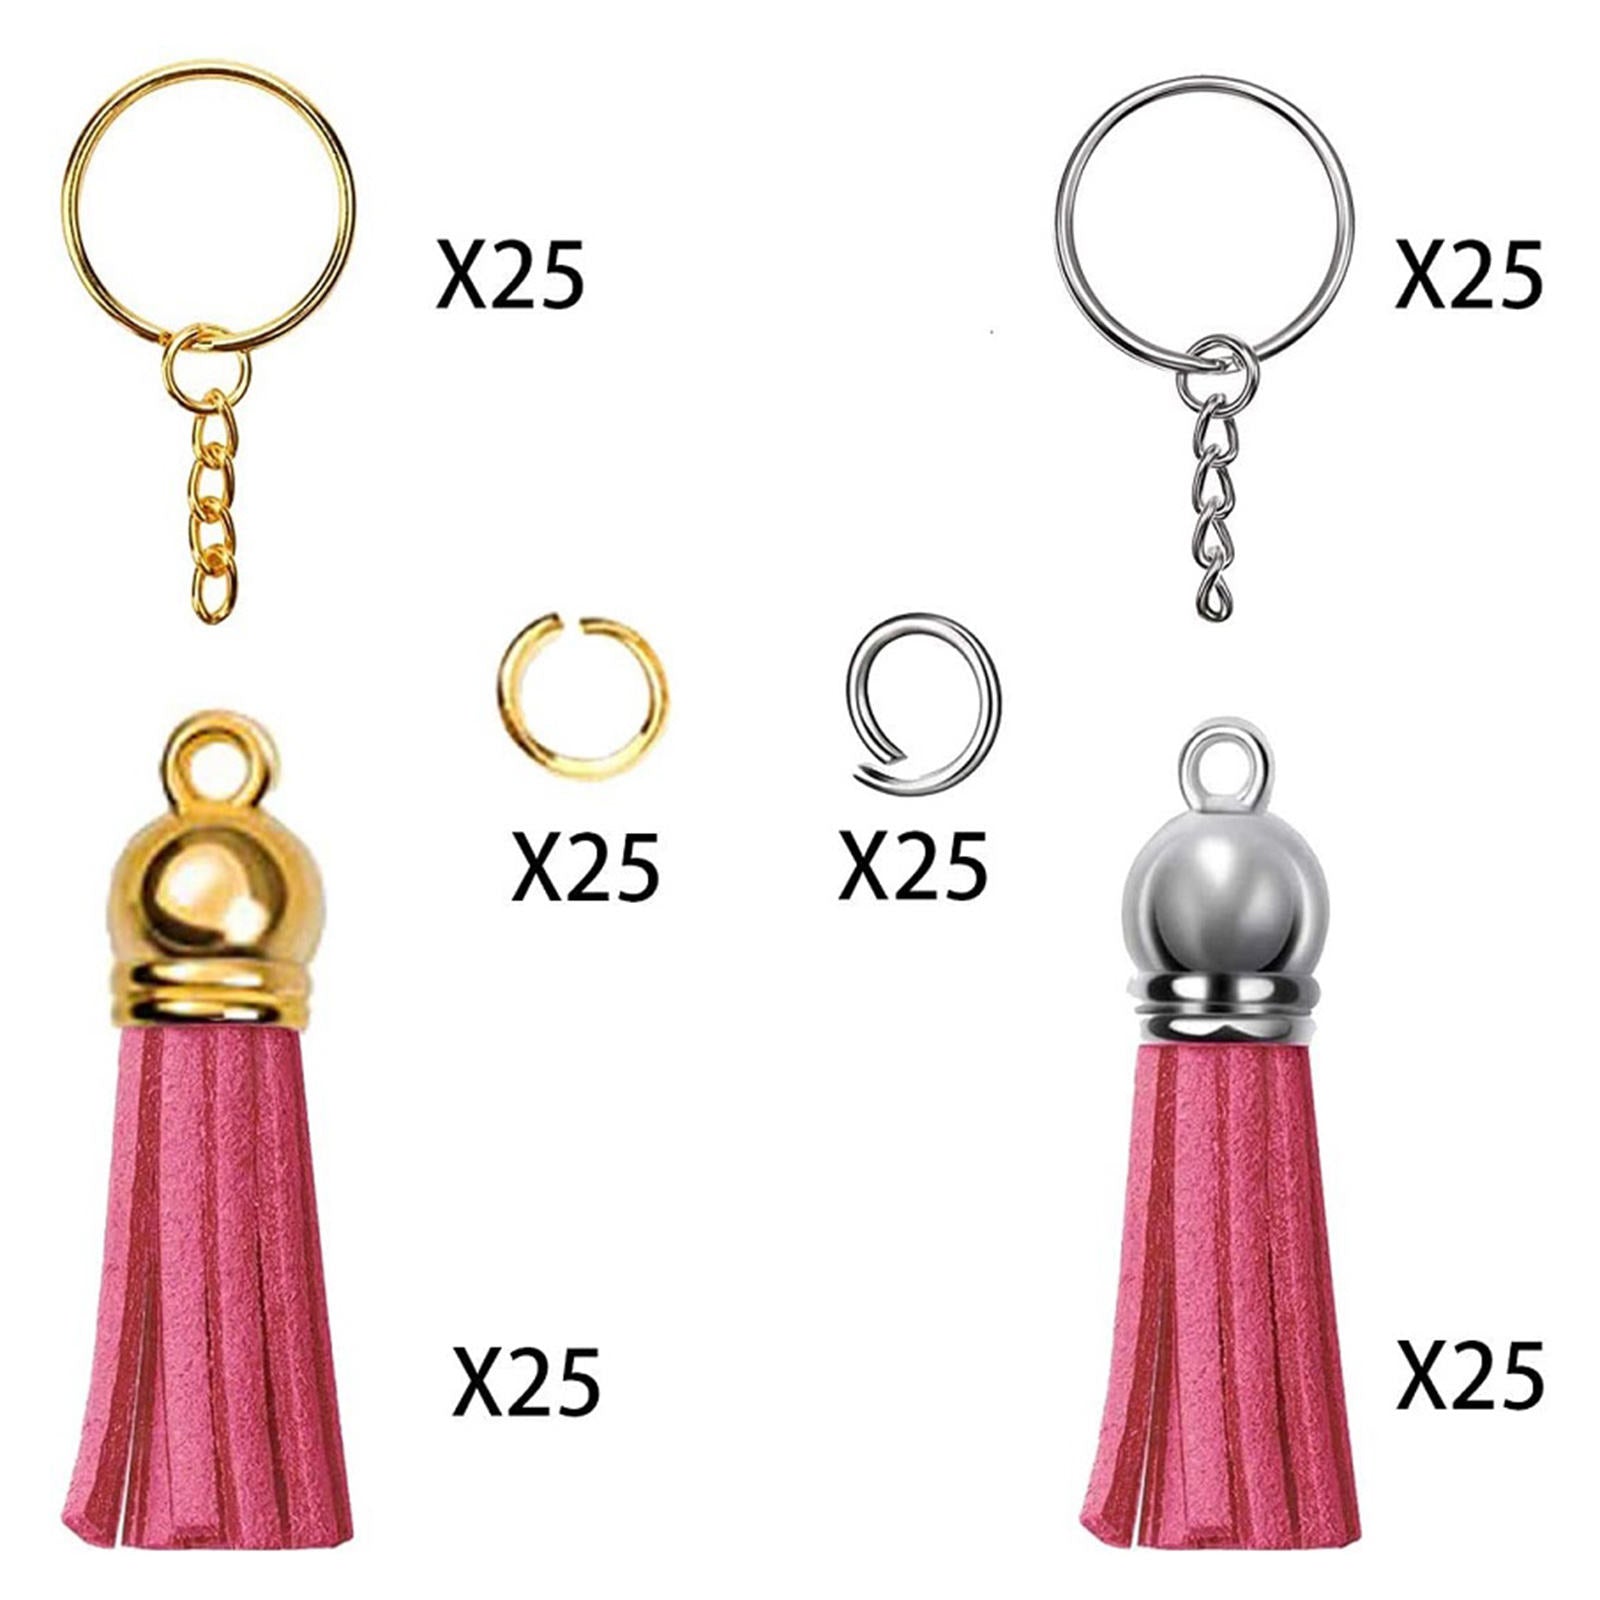 150x Keychain Tassels Key Chain Ring Pendants Bulk DIY for Handmade Making